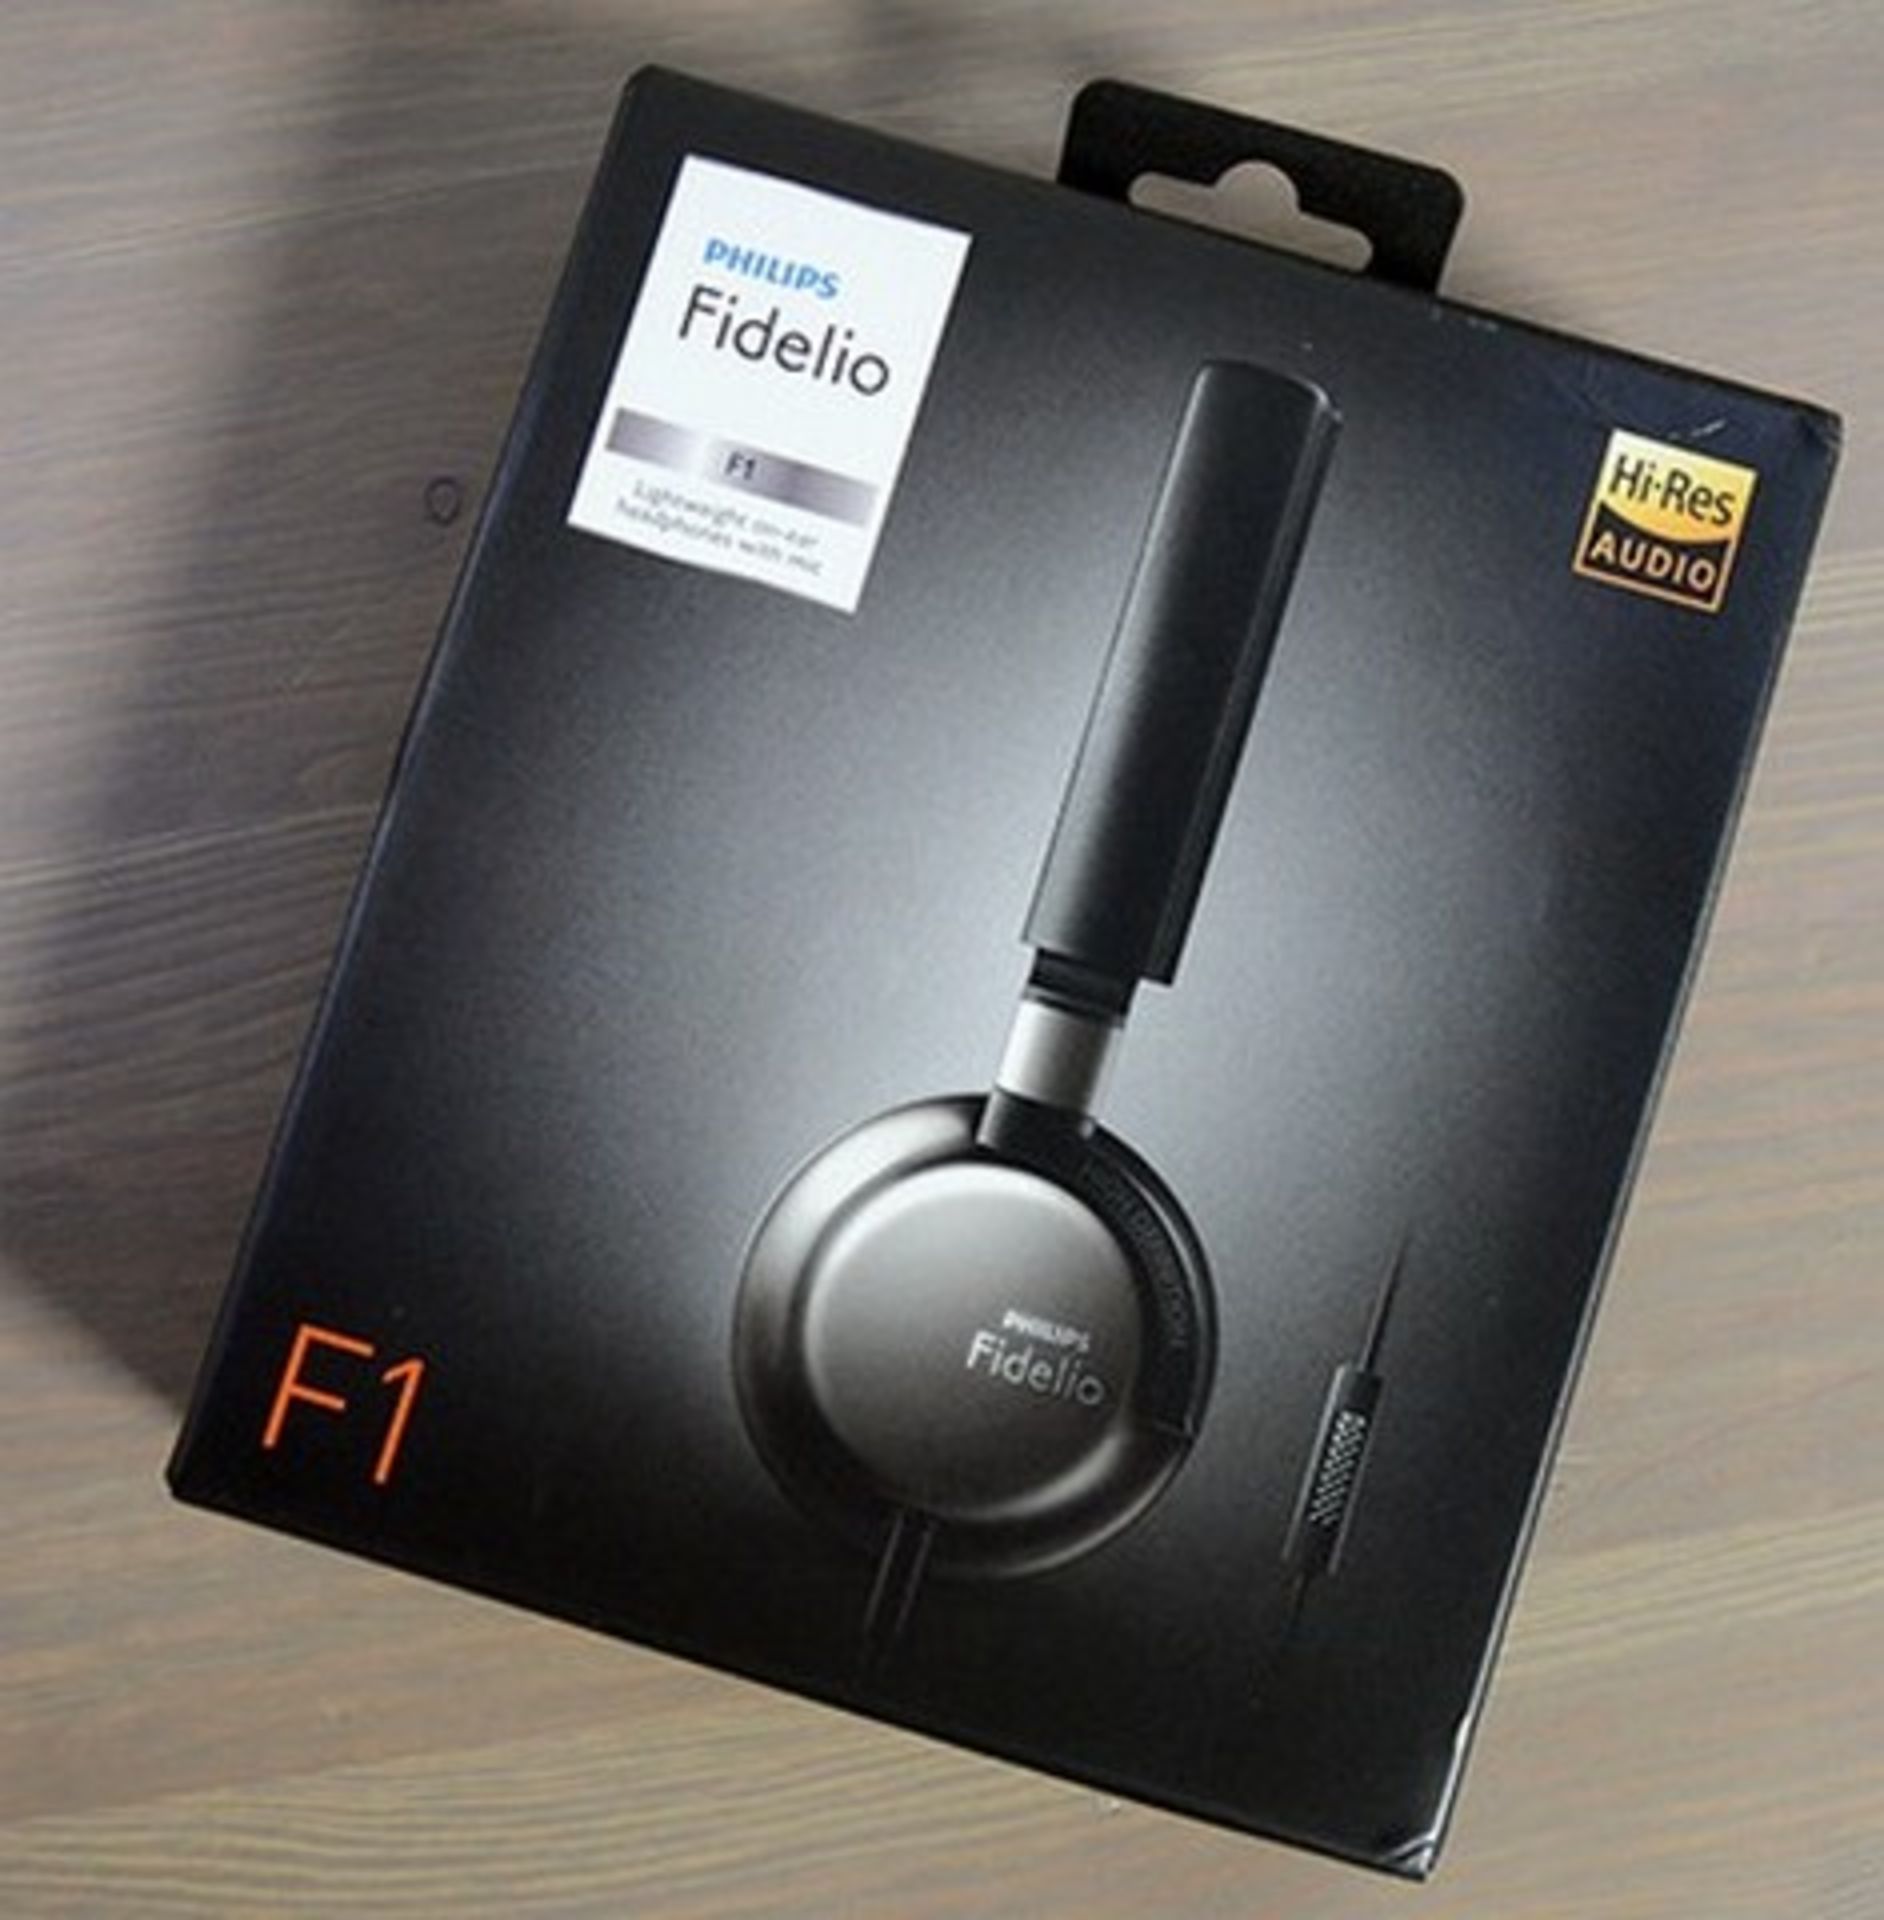 V Brand New Philips Fidelio F1 Lightweight On-Ear Headphones - Amazon Price £77.42 - with Microphone